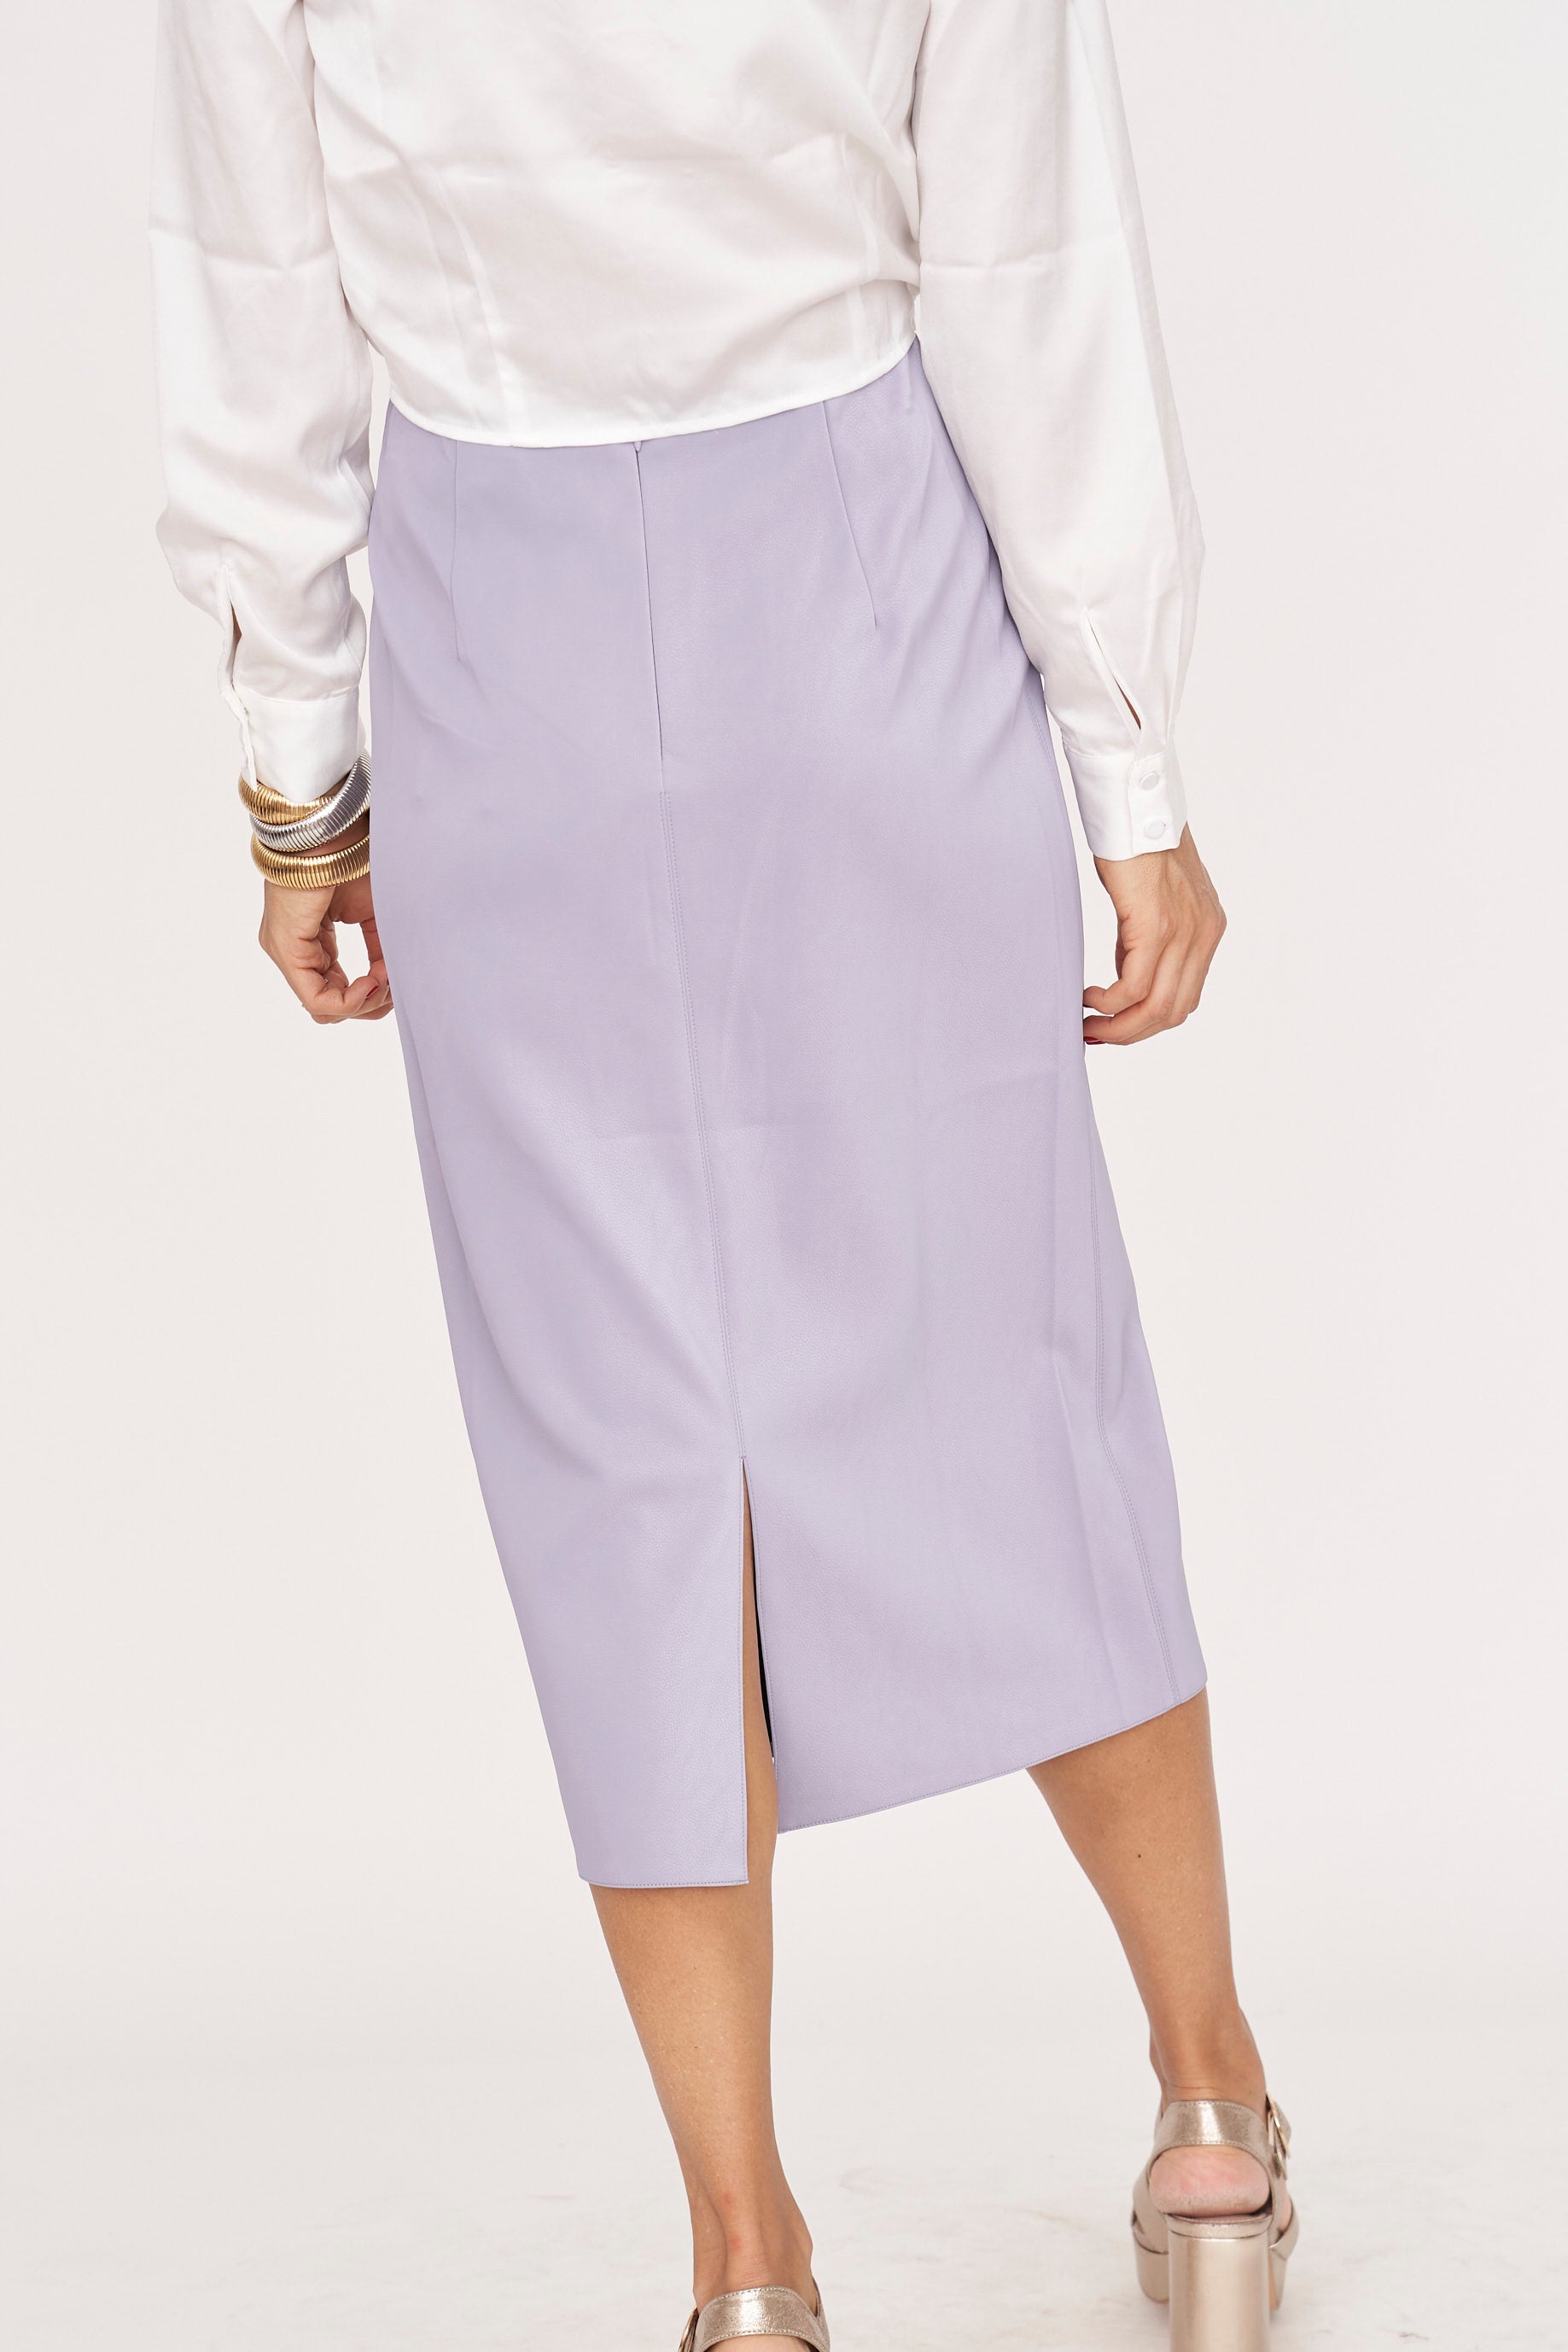 Ello Lavender Leather Midi Skirt